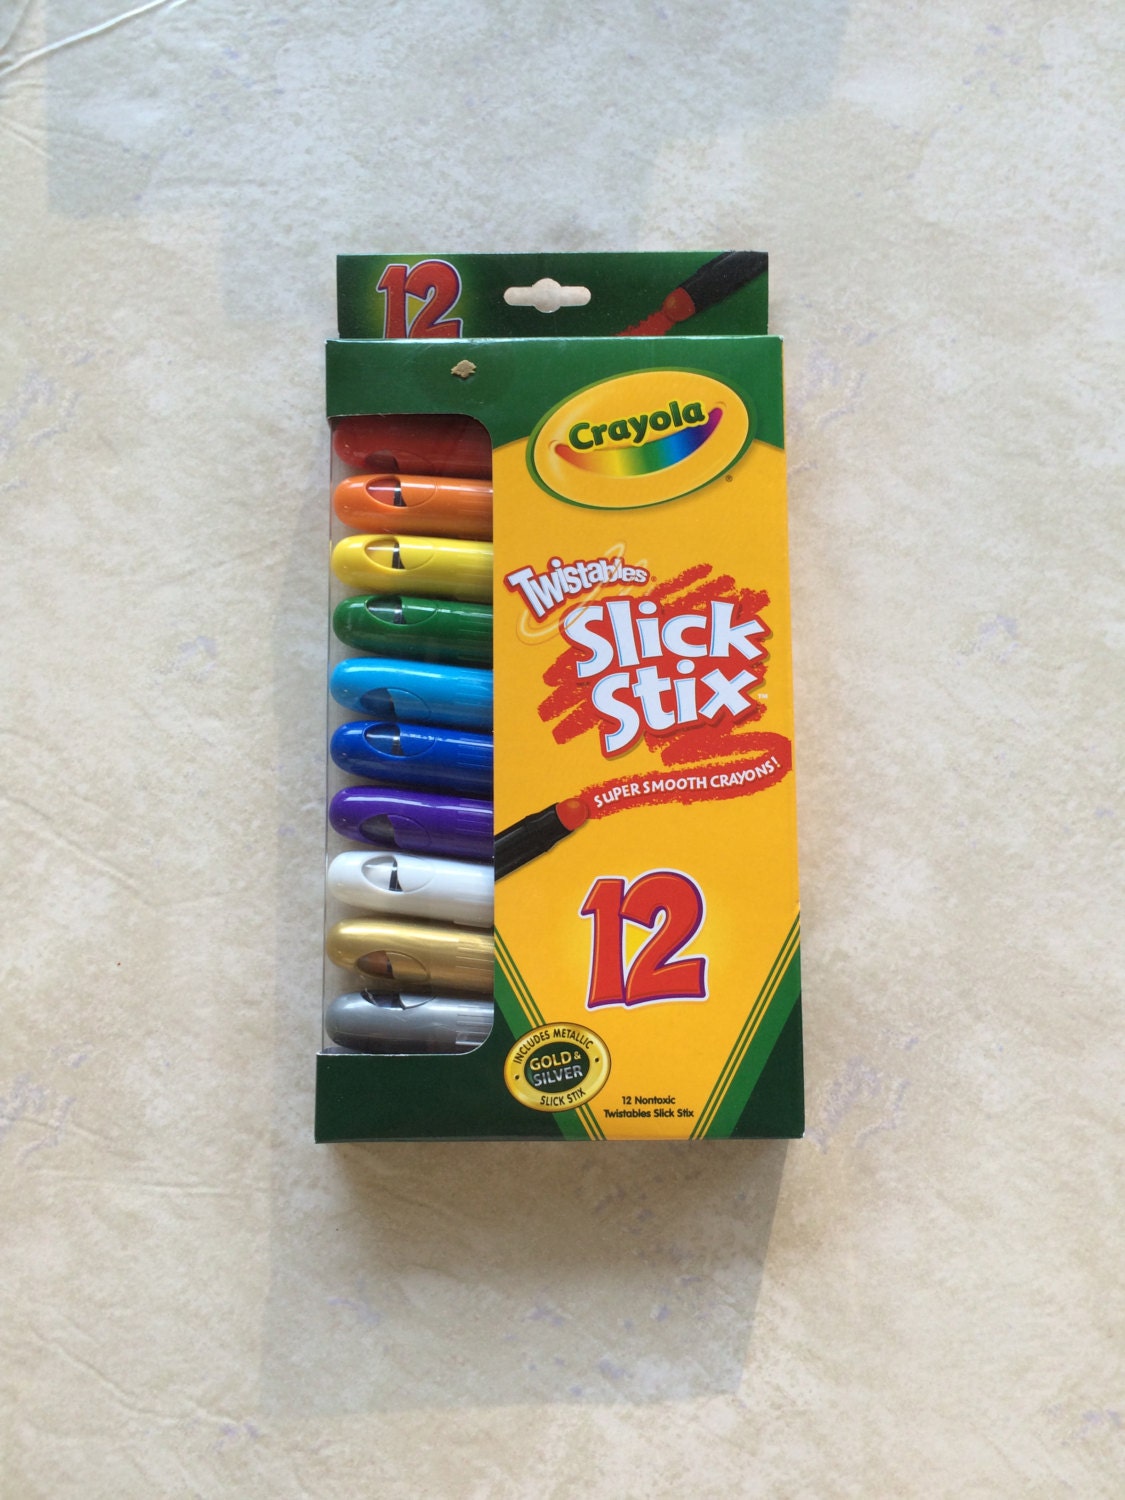 Crayola Slick Stix Twistable Super Smooth Crayons 12/pkg A